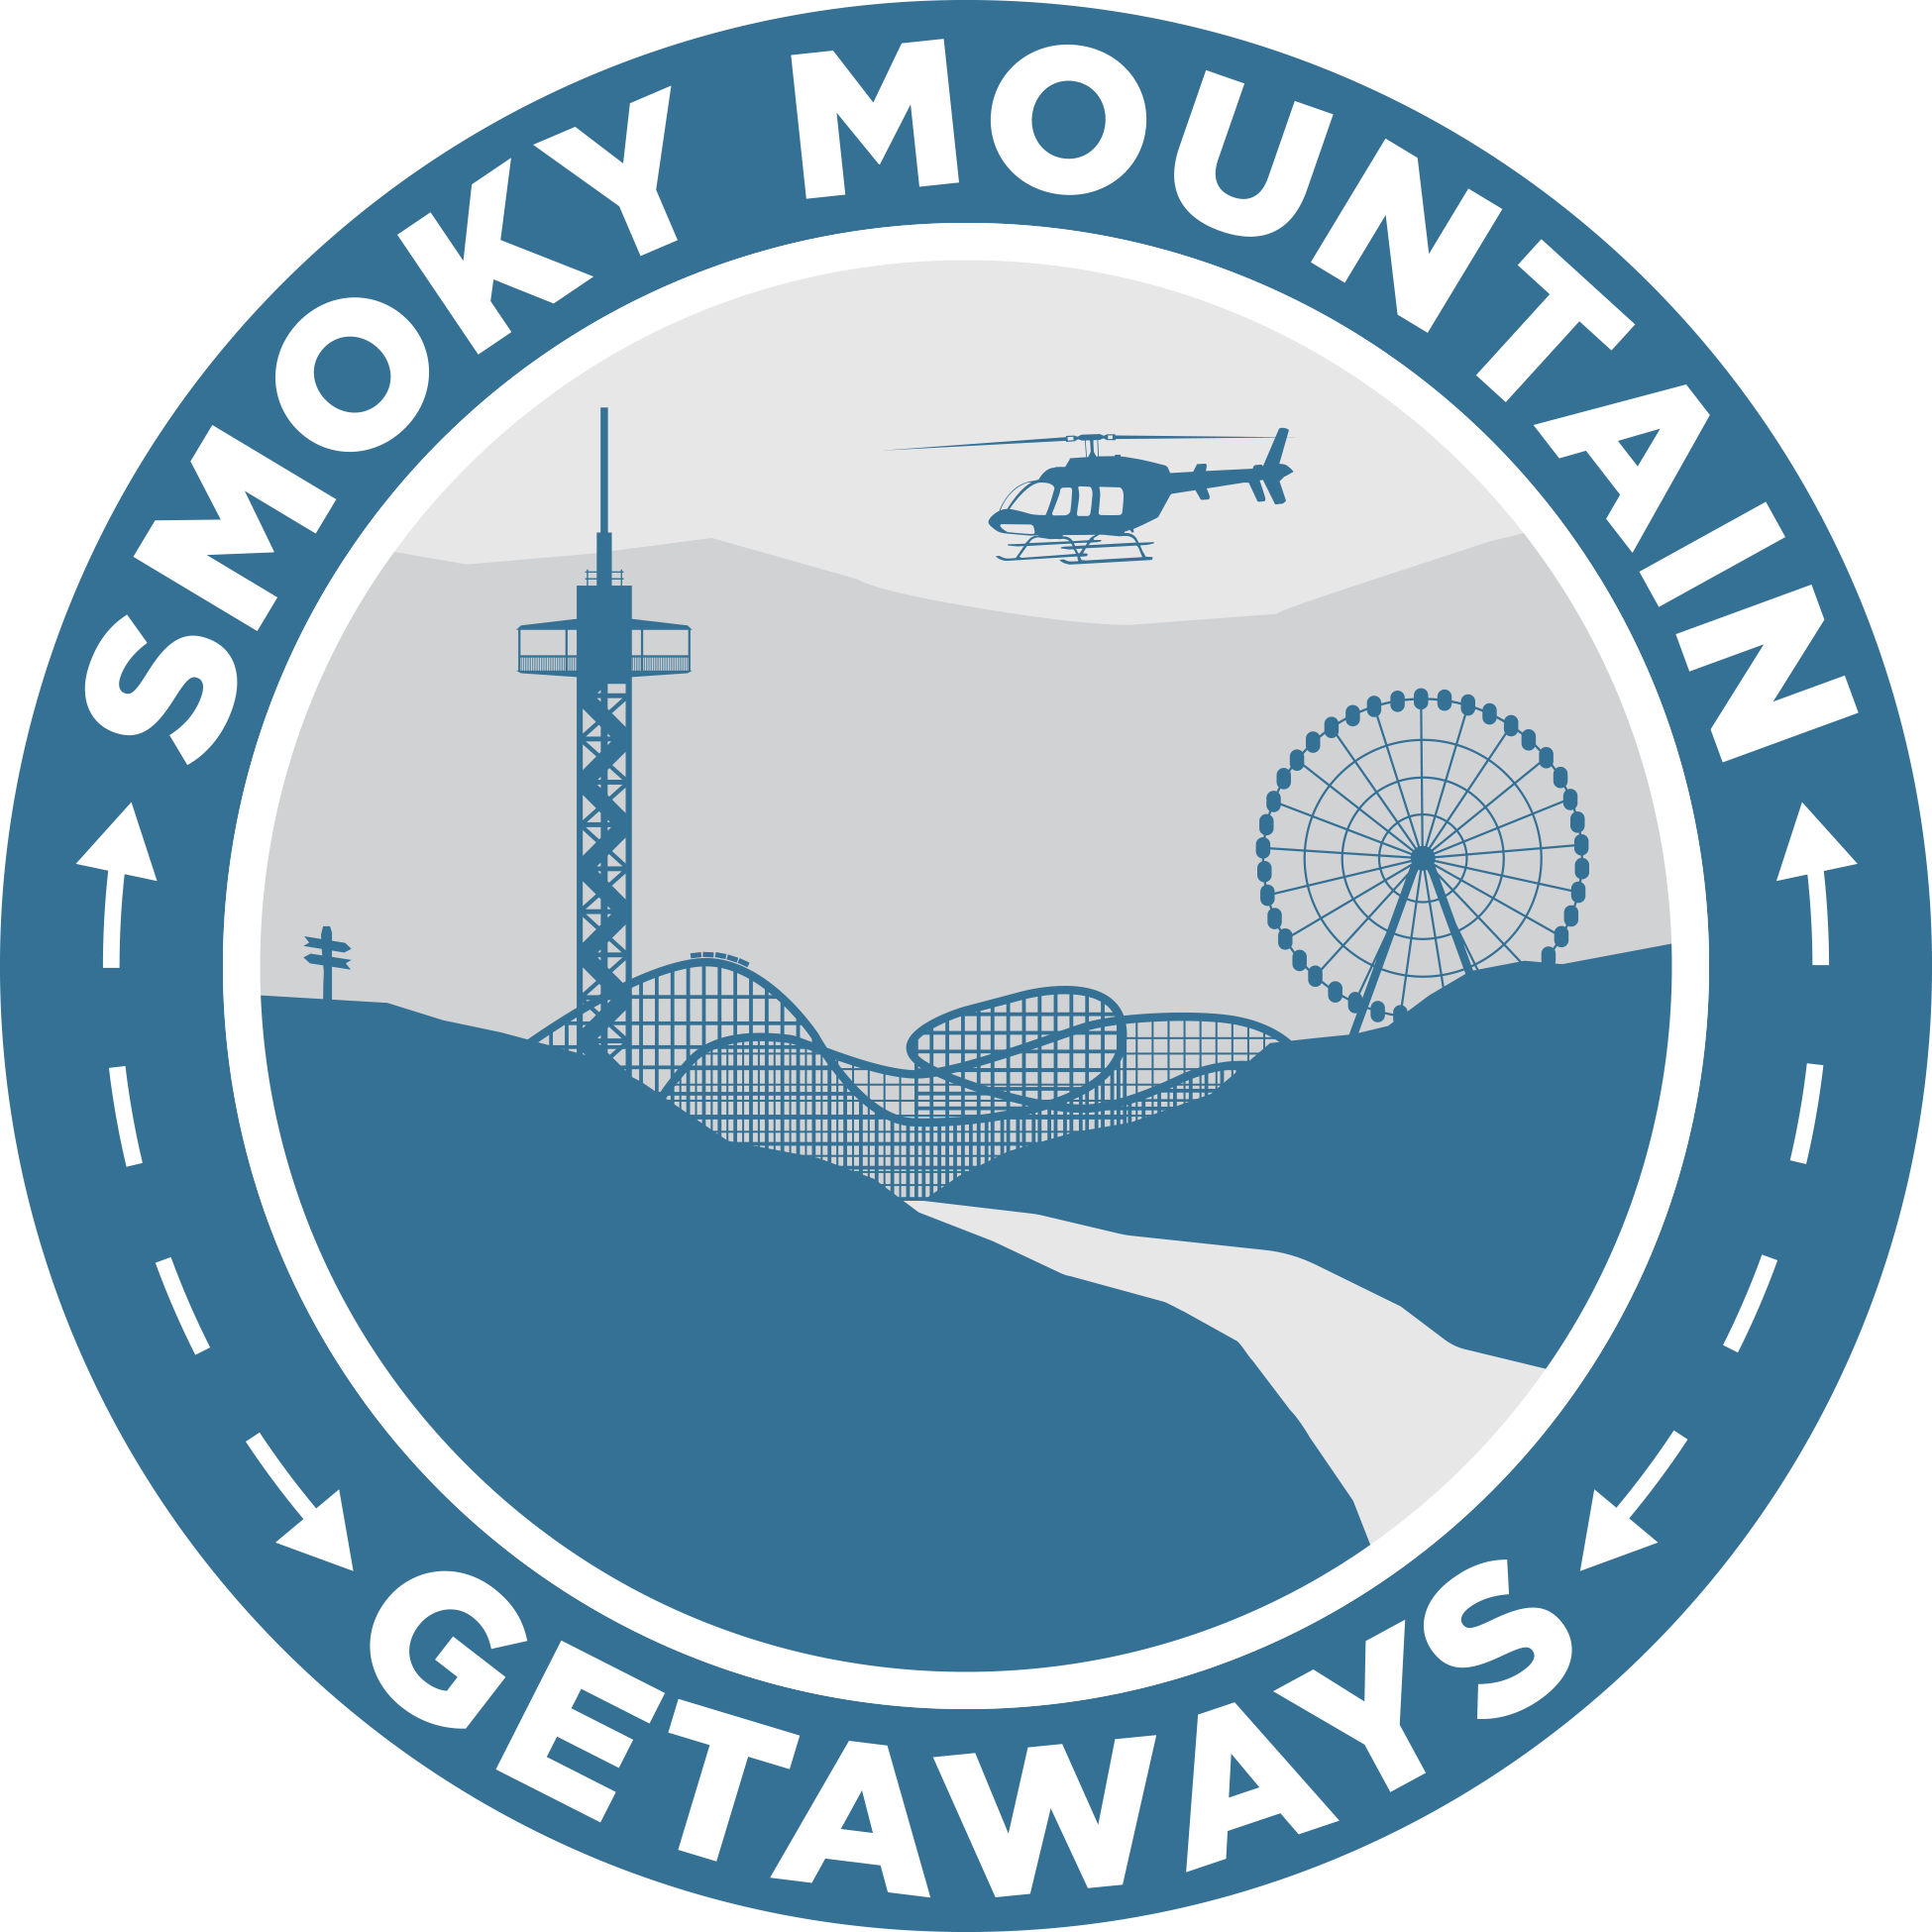 Smoky Mountain Getaways